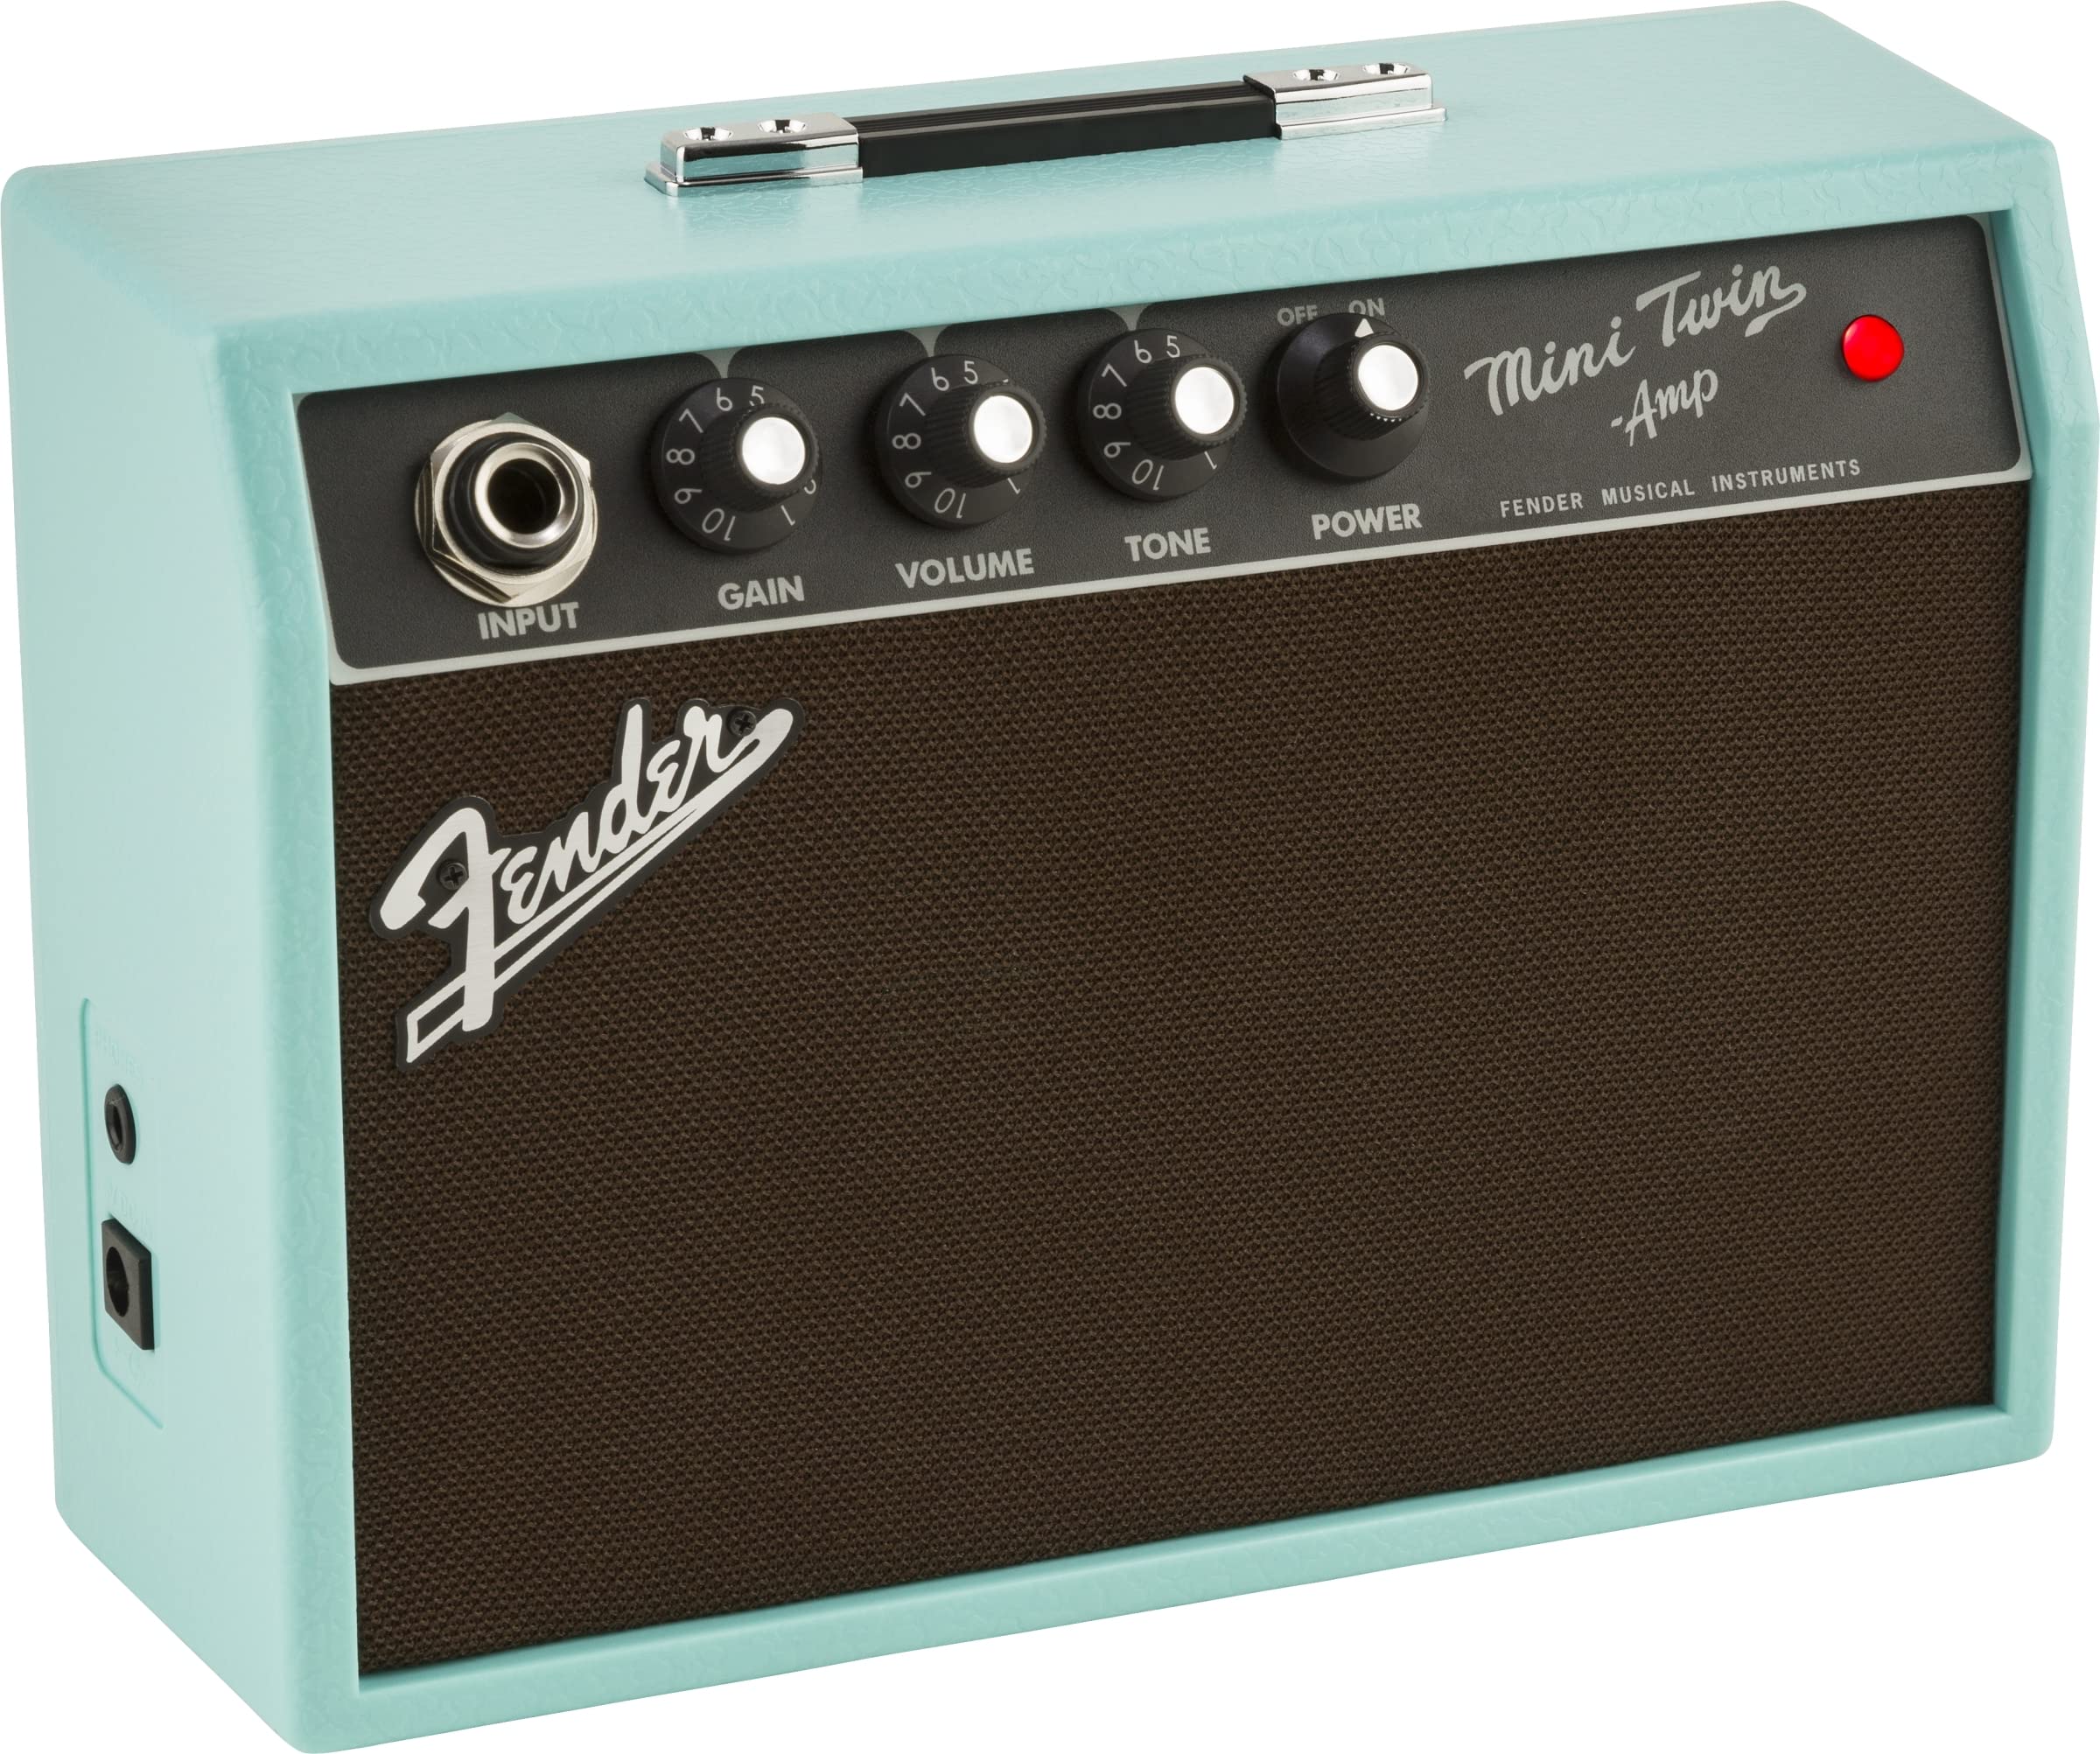 Fender Mini 65 Twin Amp Daphne Blue 1W Guitar Amplifier $39.99 + FS at Amazon